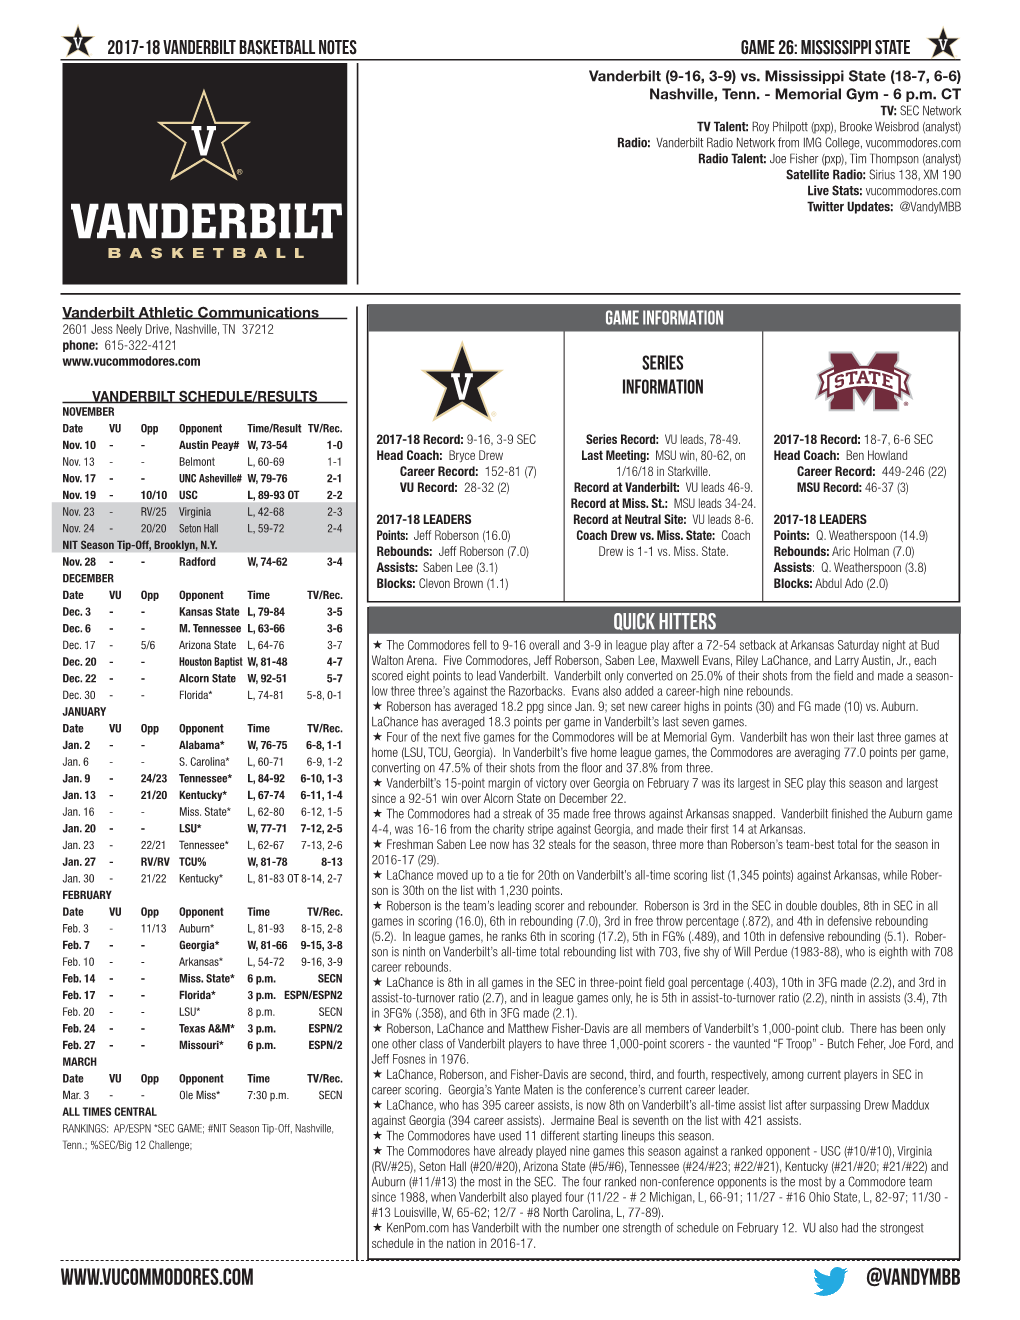 Mississippi State Vanderbilt (9-16, 3-9) Vs